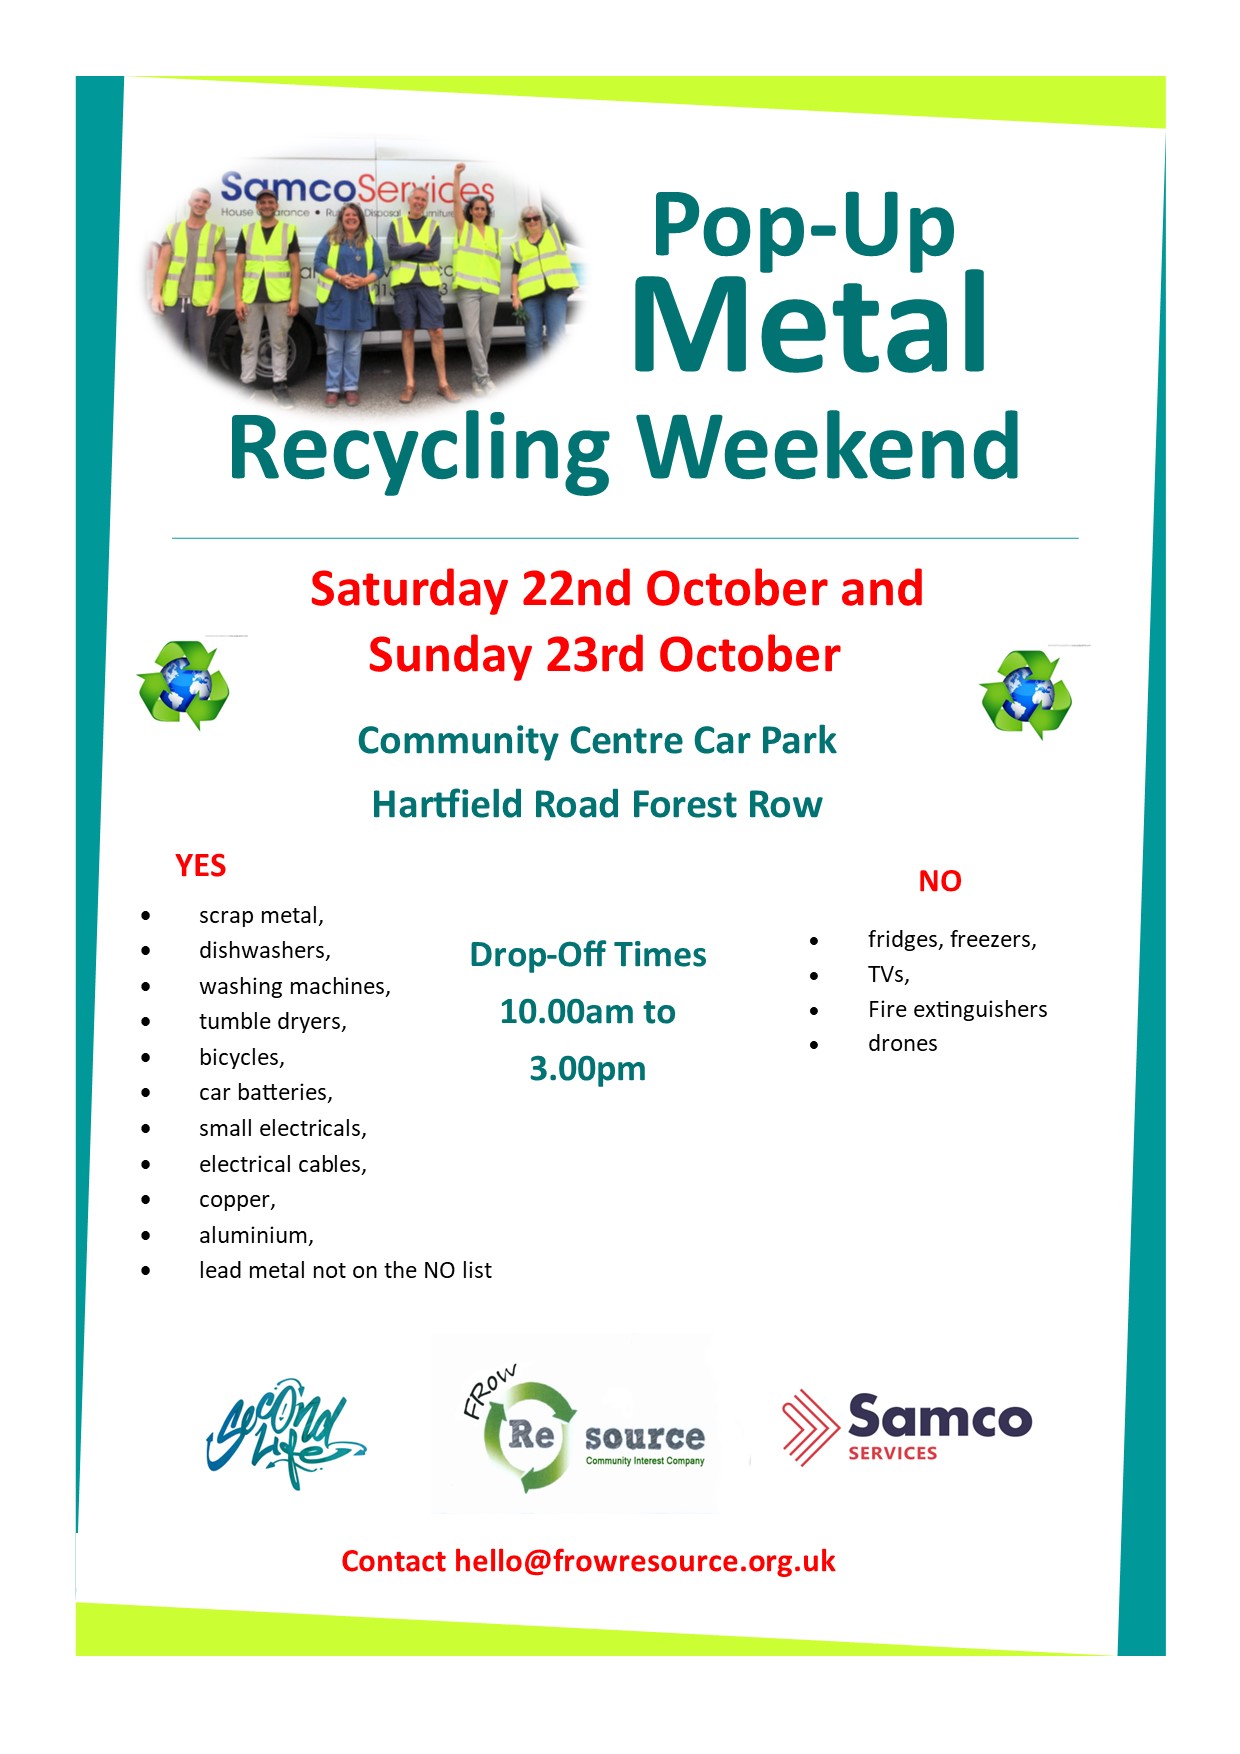 Pop-up Metal Recycling Weekend